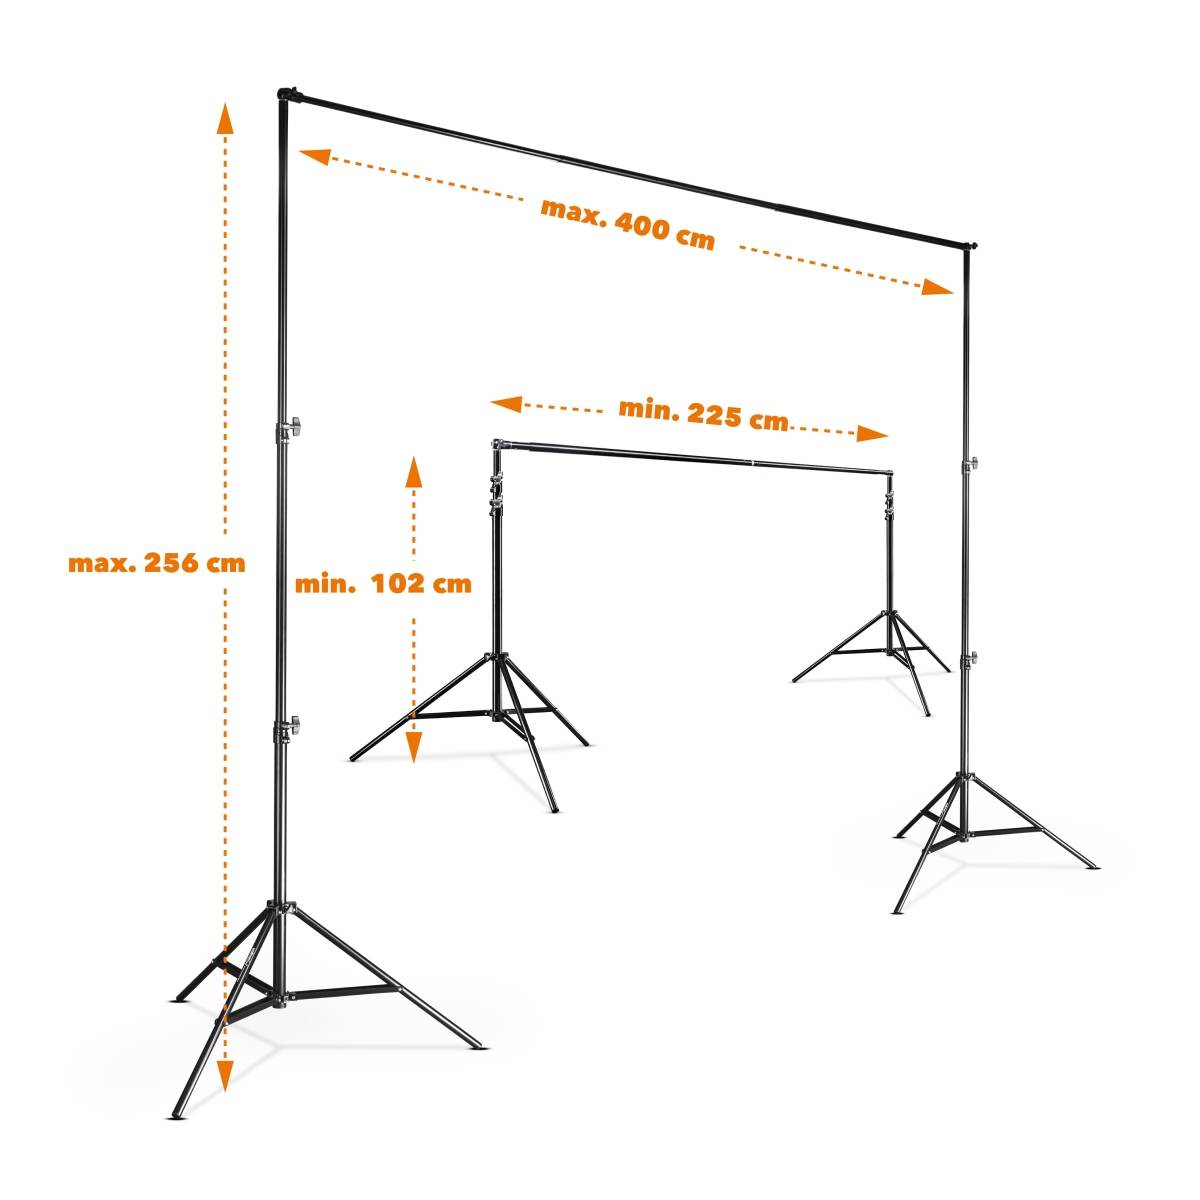 Walimex pro TELE Background System, 225-400cm